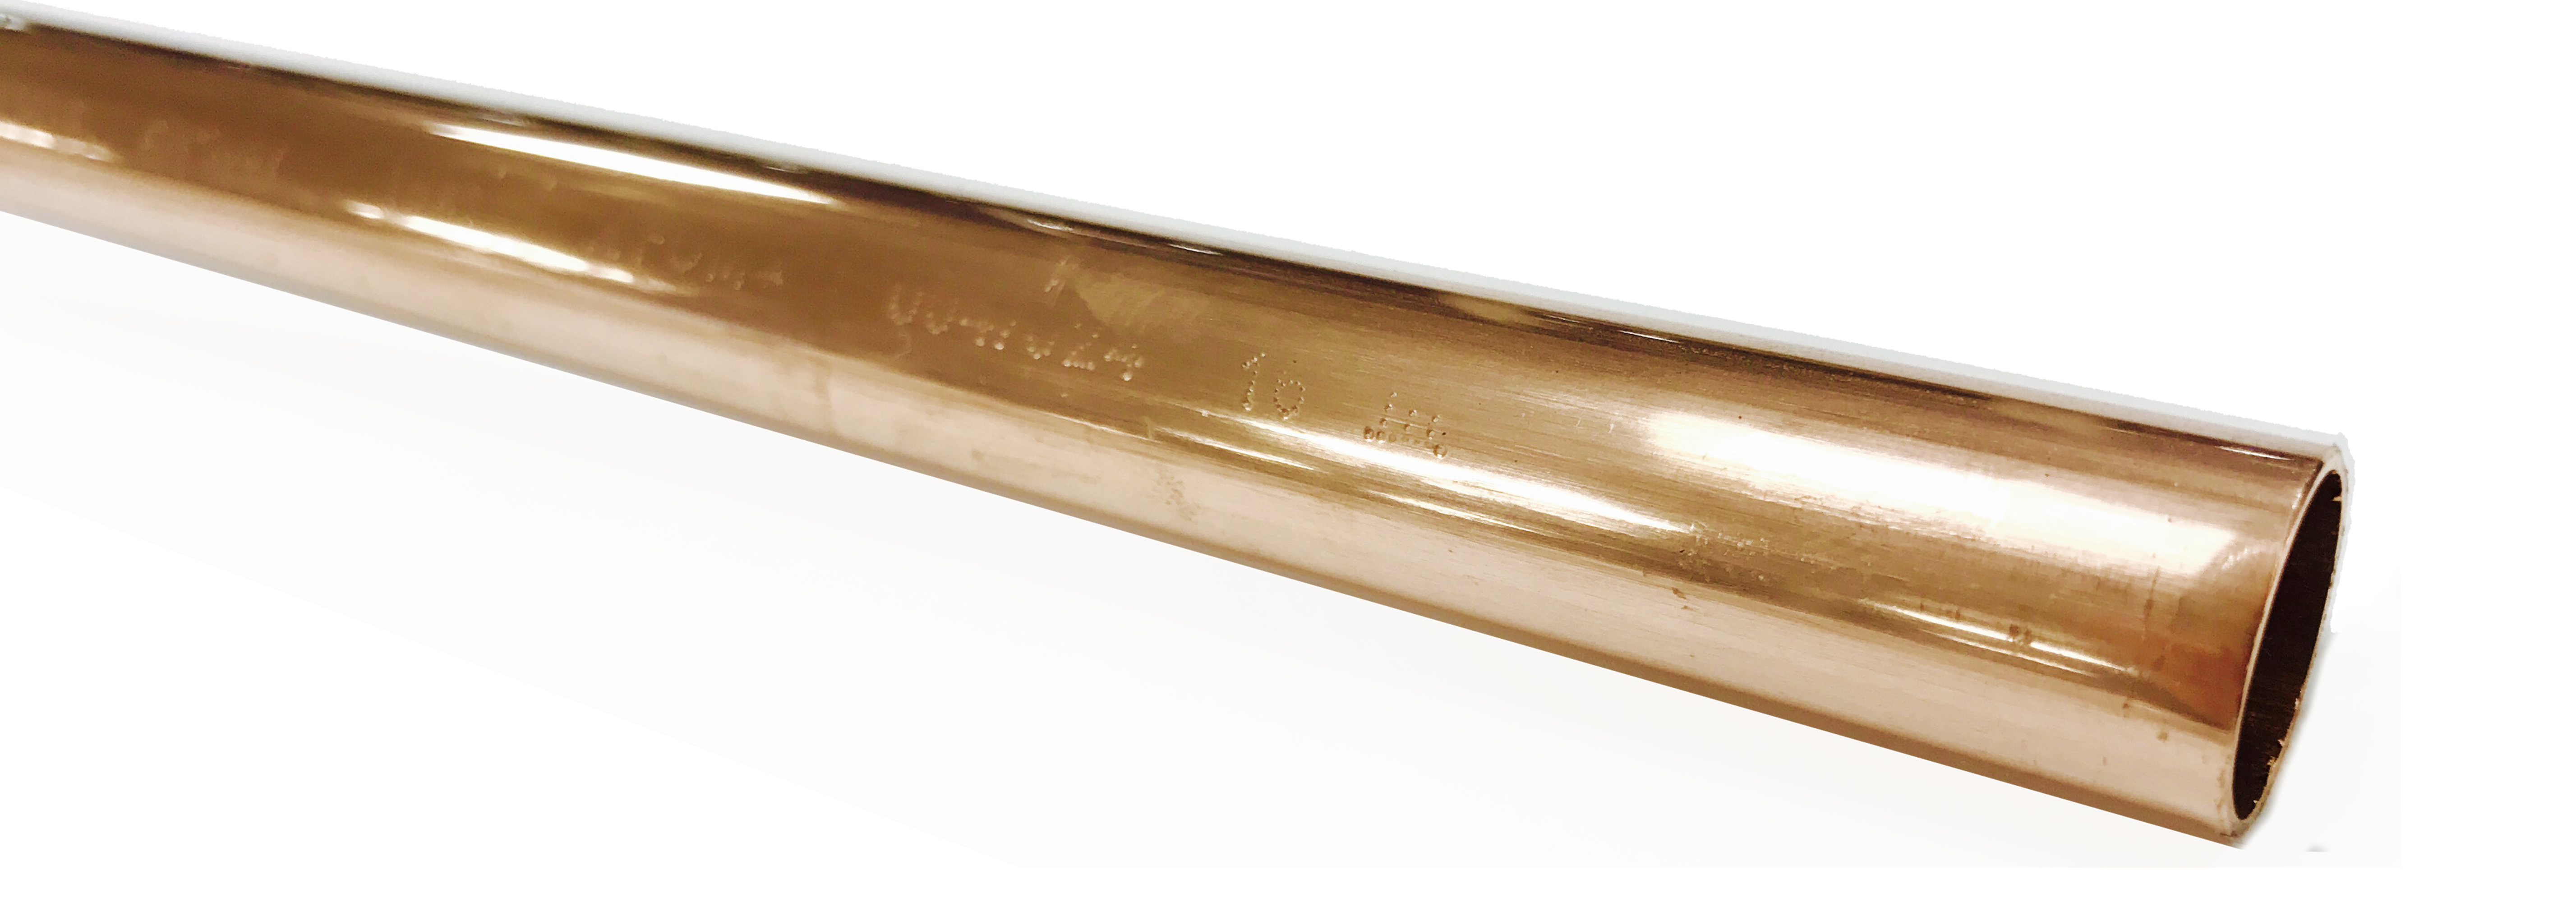 Tubo de cobre ø15 mm 2,5 metros de longitud